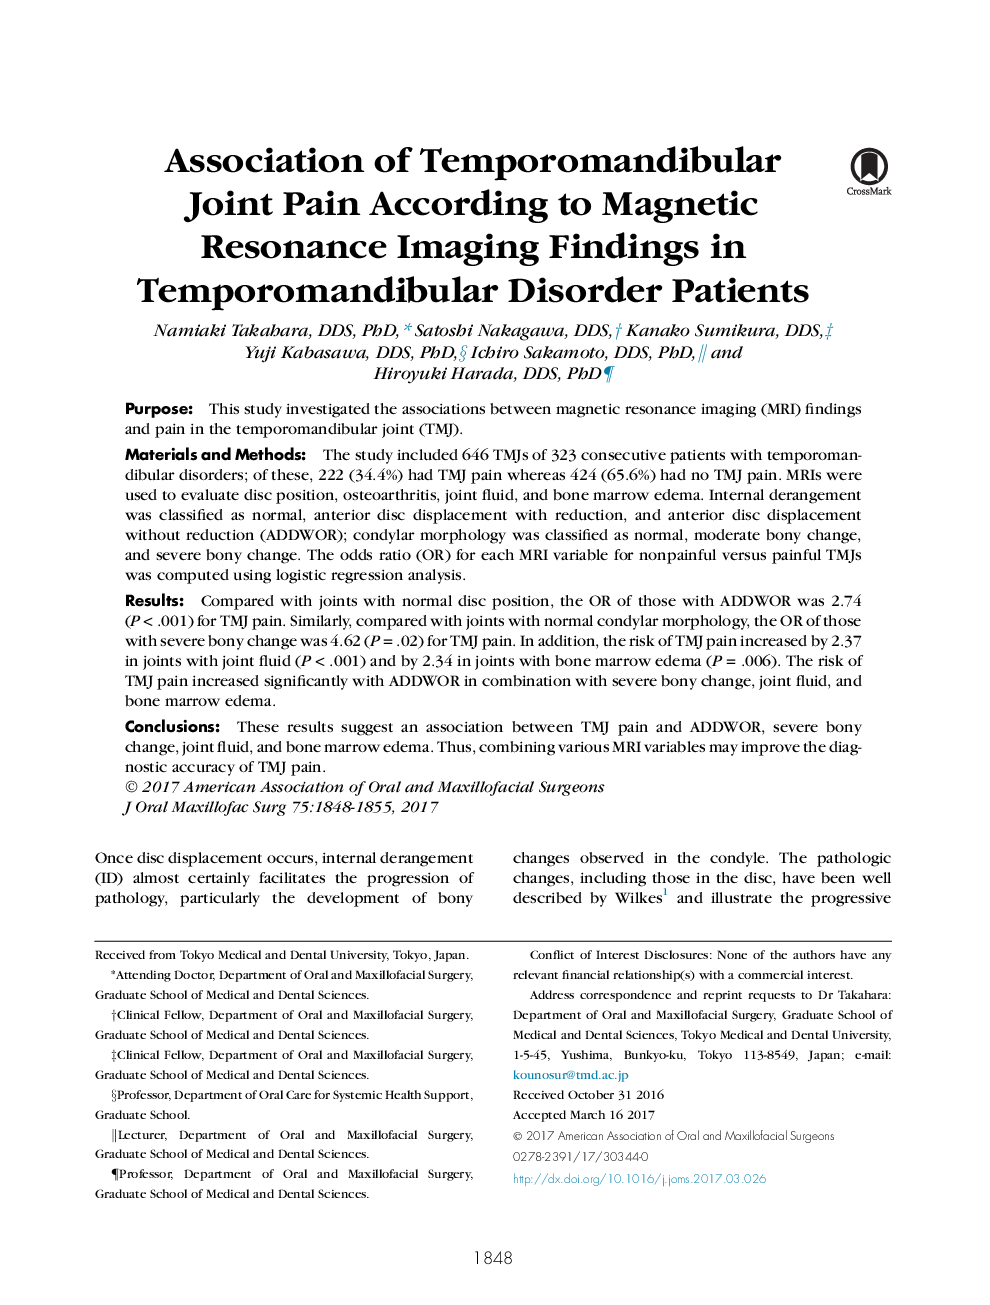 Association of Temporomandibular Joint Pain According to Magnetic Resonance Imaging Findings in Temporomandibular Disorder Patients